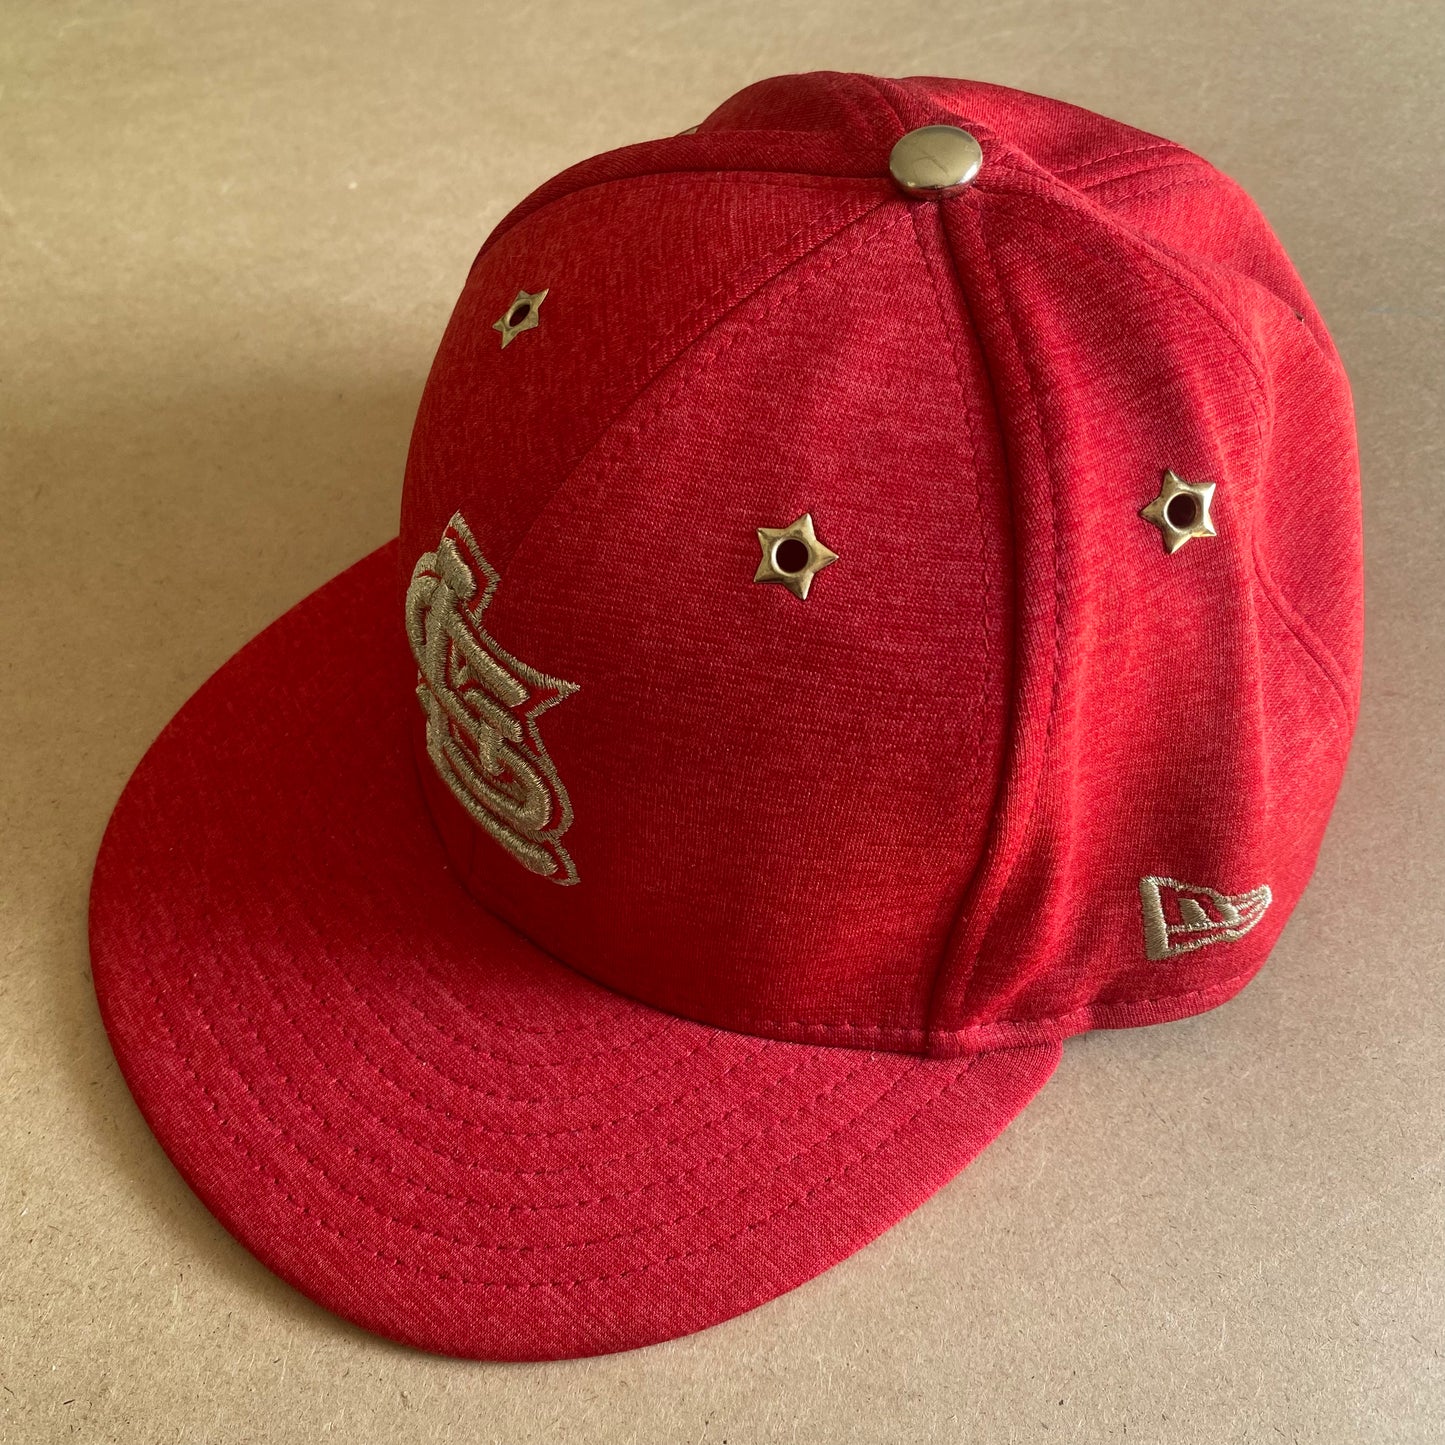 Secondhand New Era St. Louis Cardinals Hat